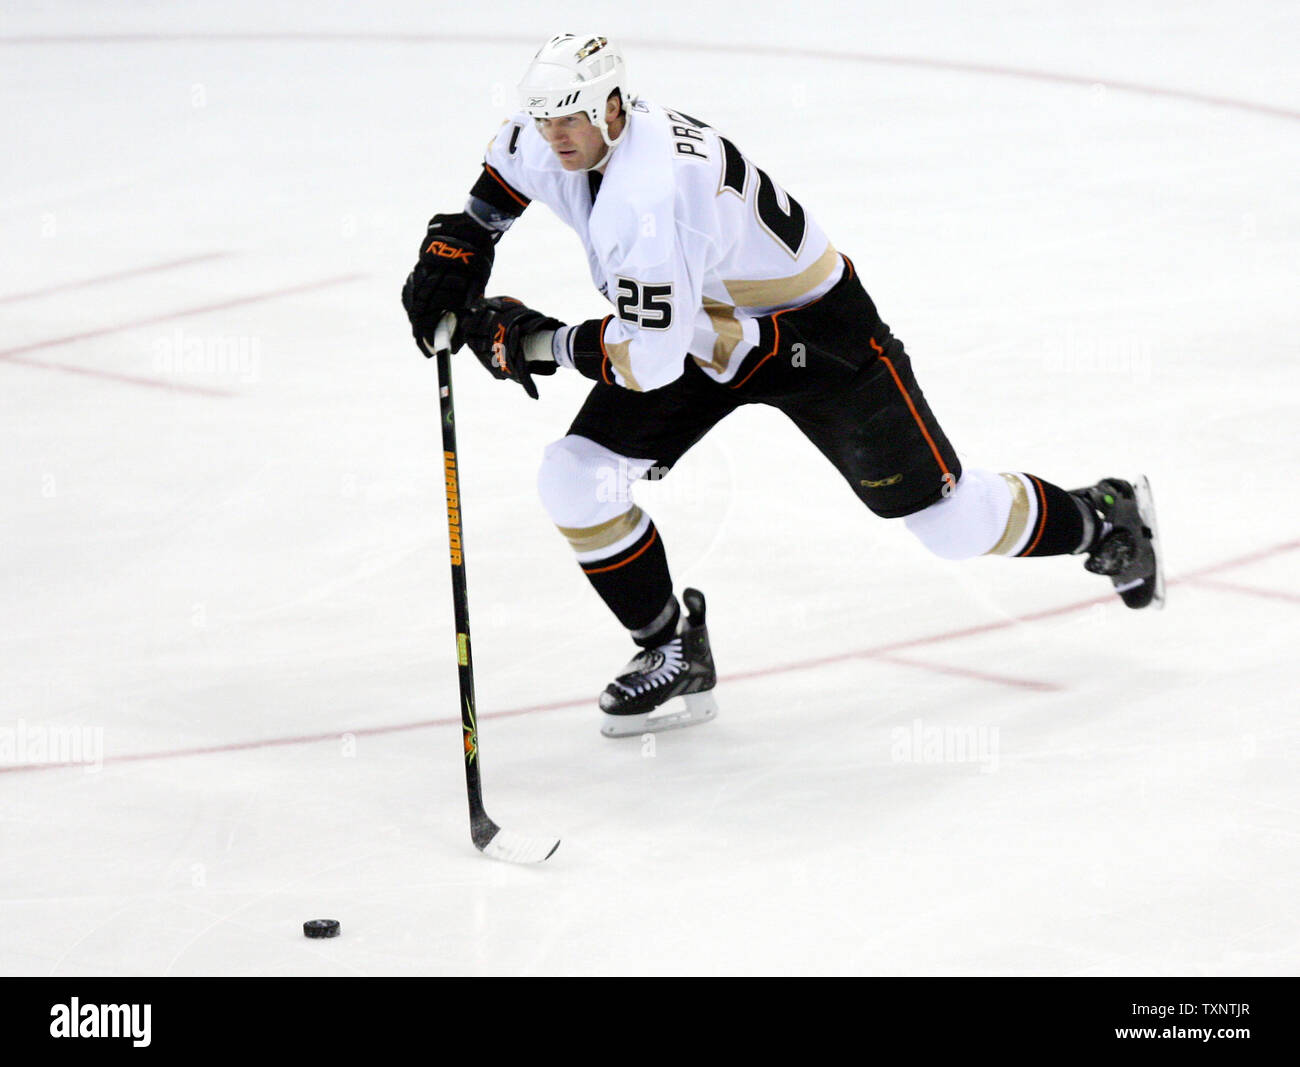 Anaheim Mighty Ducks Photo - National Hockey League (NHL) - Chris